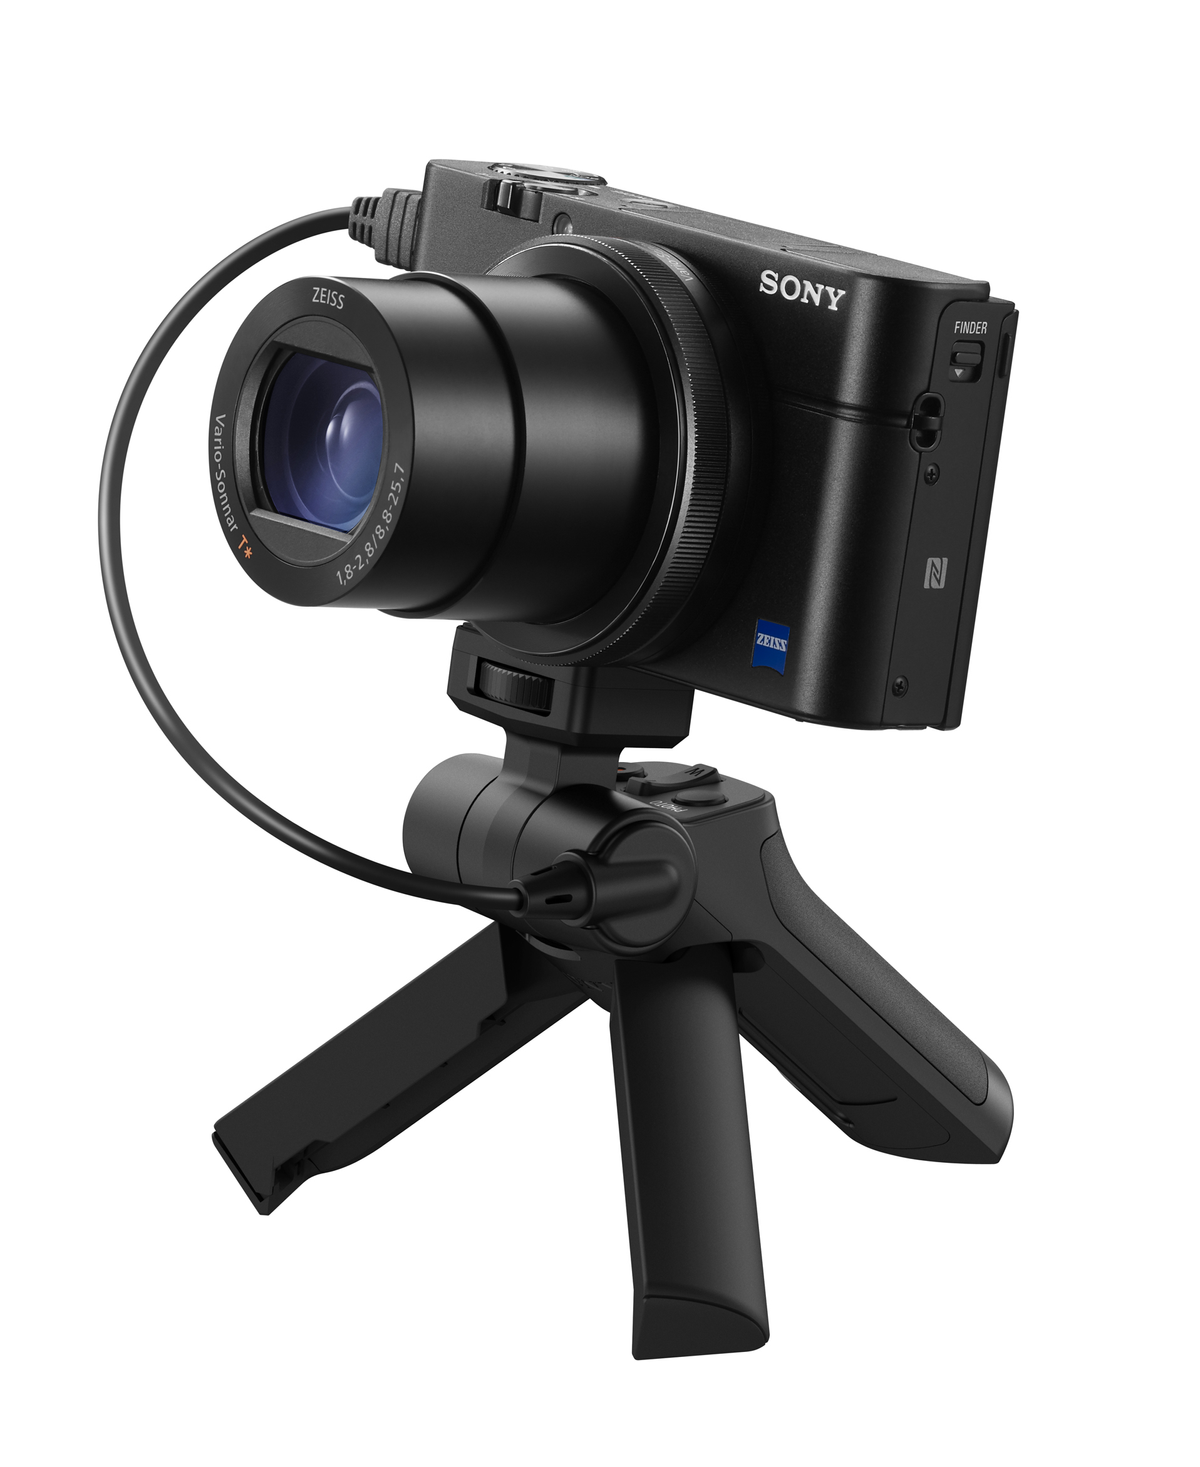 SONY DSC-RX 100 III PLUS opt. Zoom, 2.9x WLAN- Fine/TFT-LCD, GRIFF Schwarz, Digitalkamera Xtra KIT